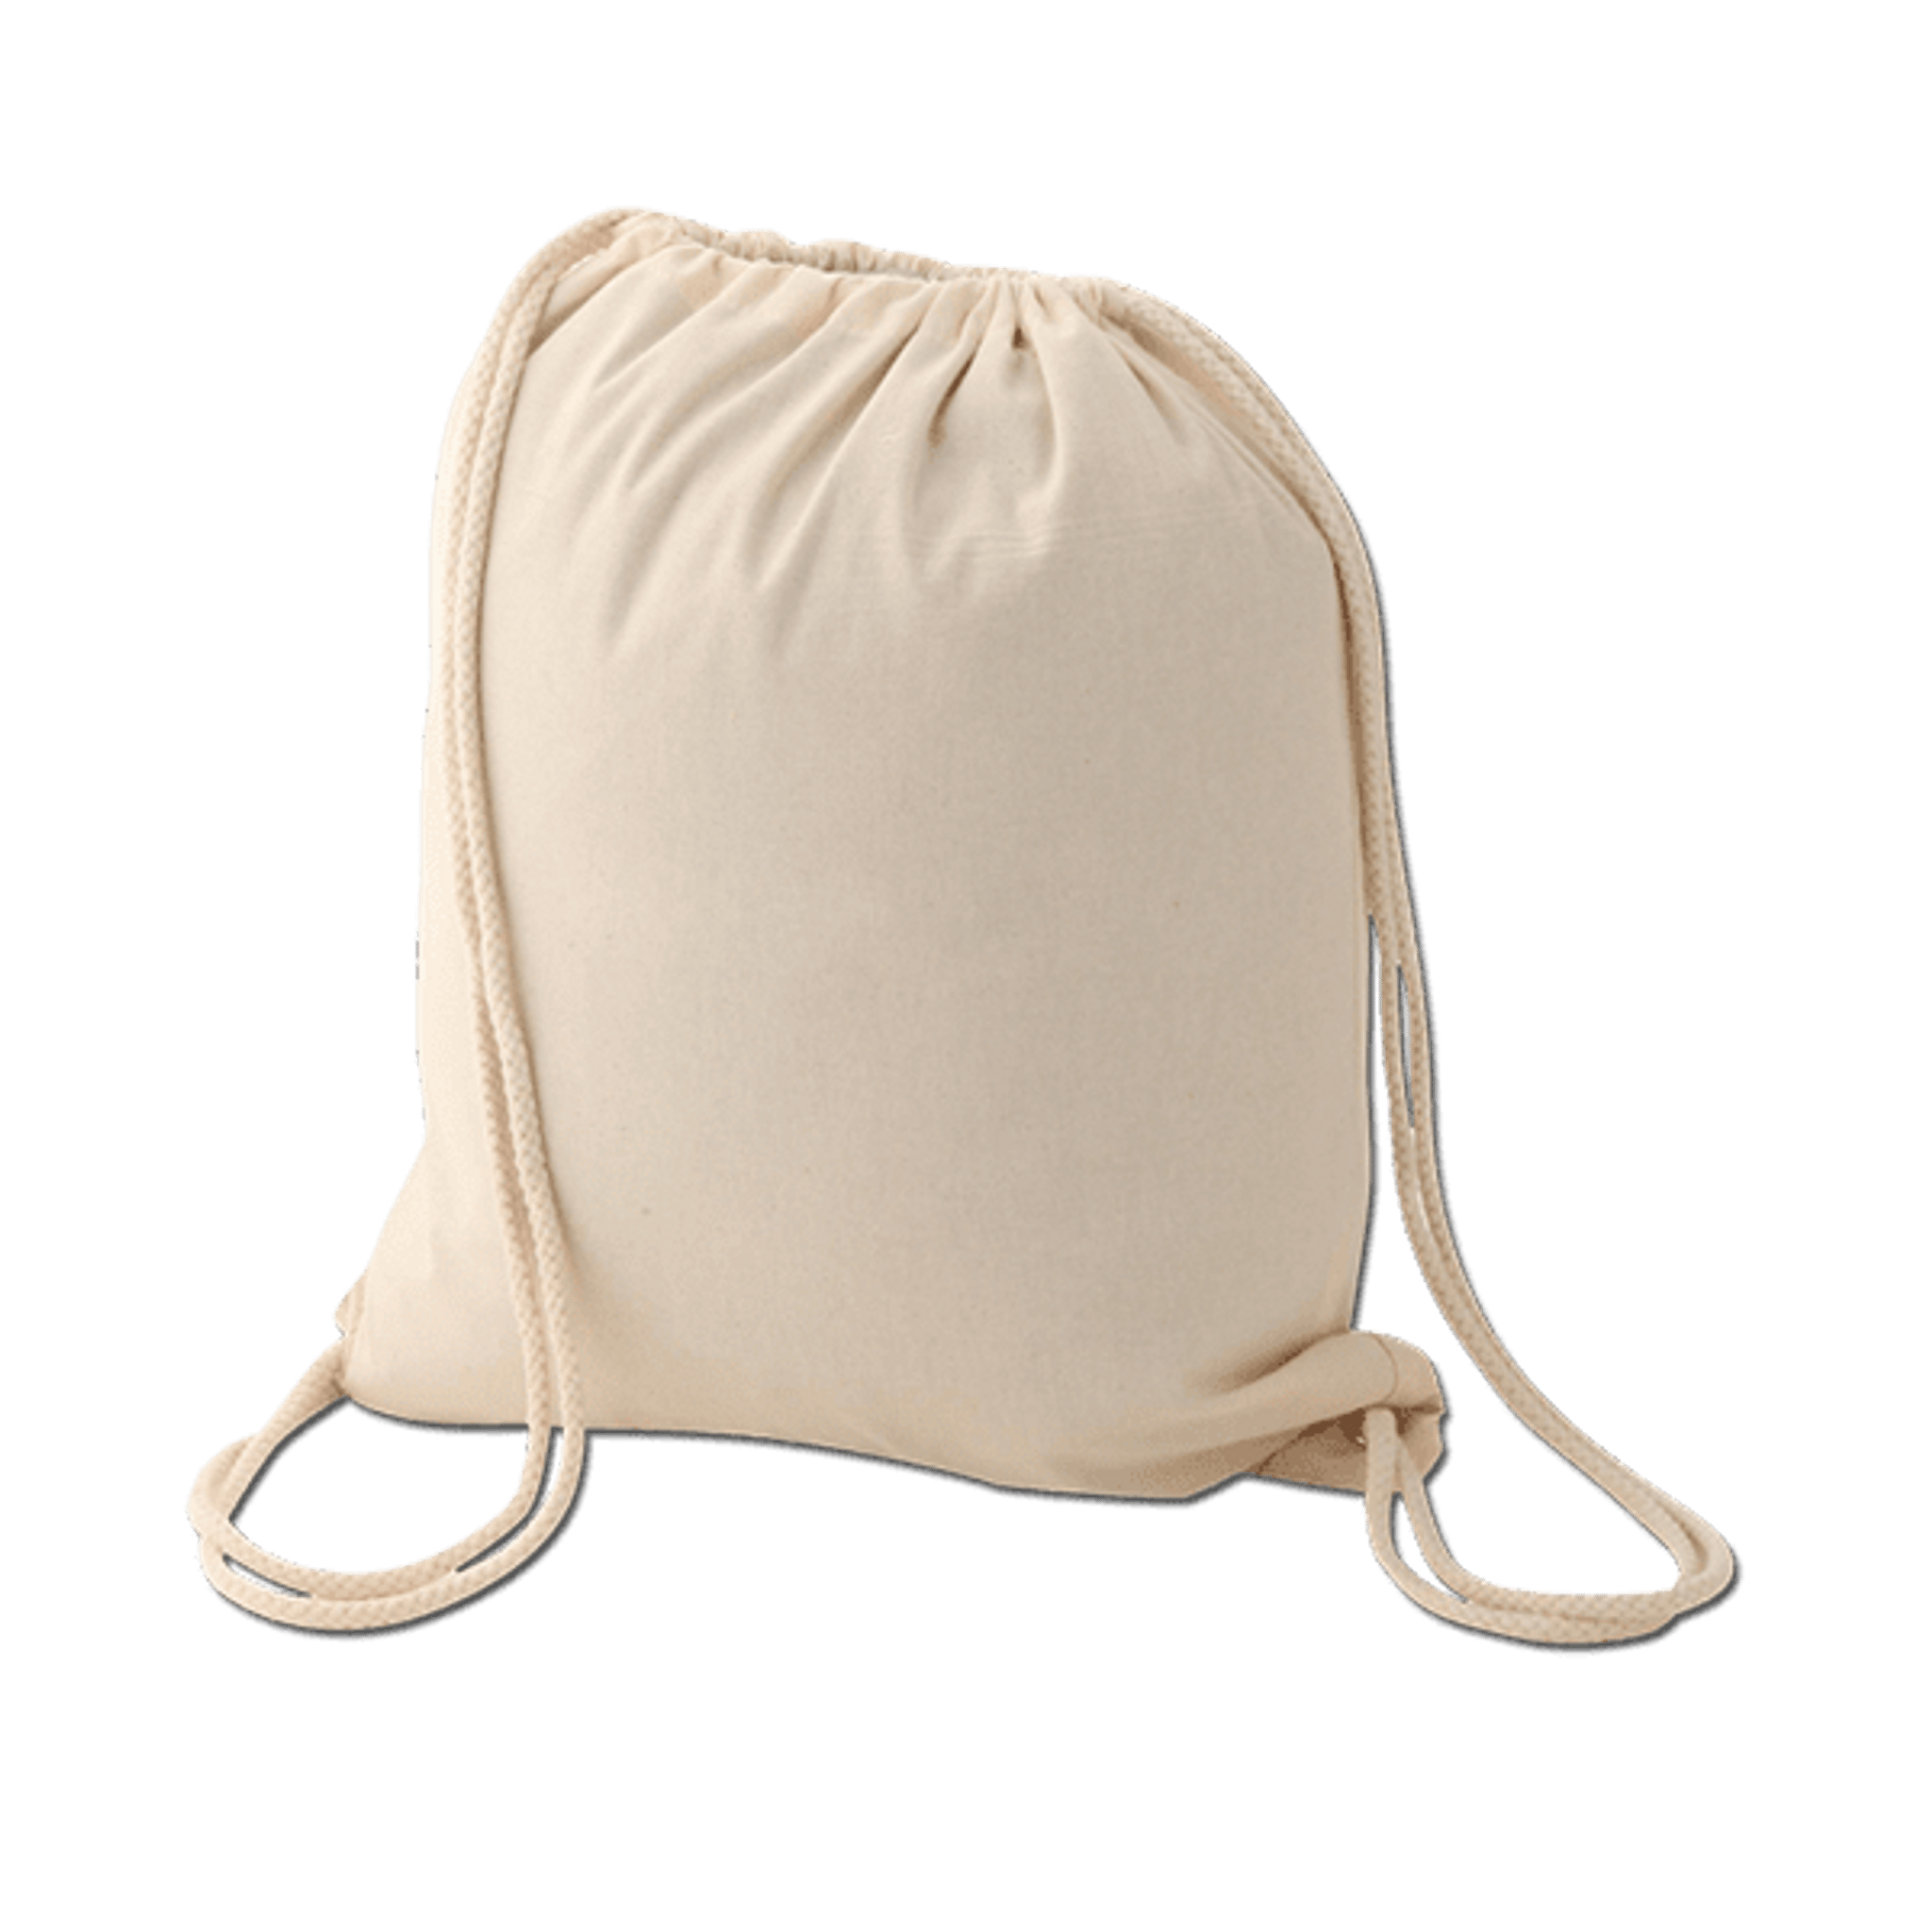 Customize Return Gift. Premium Linen Cotton Bags, Custom Printed